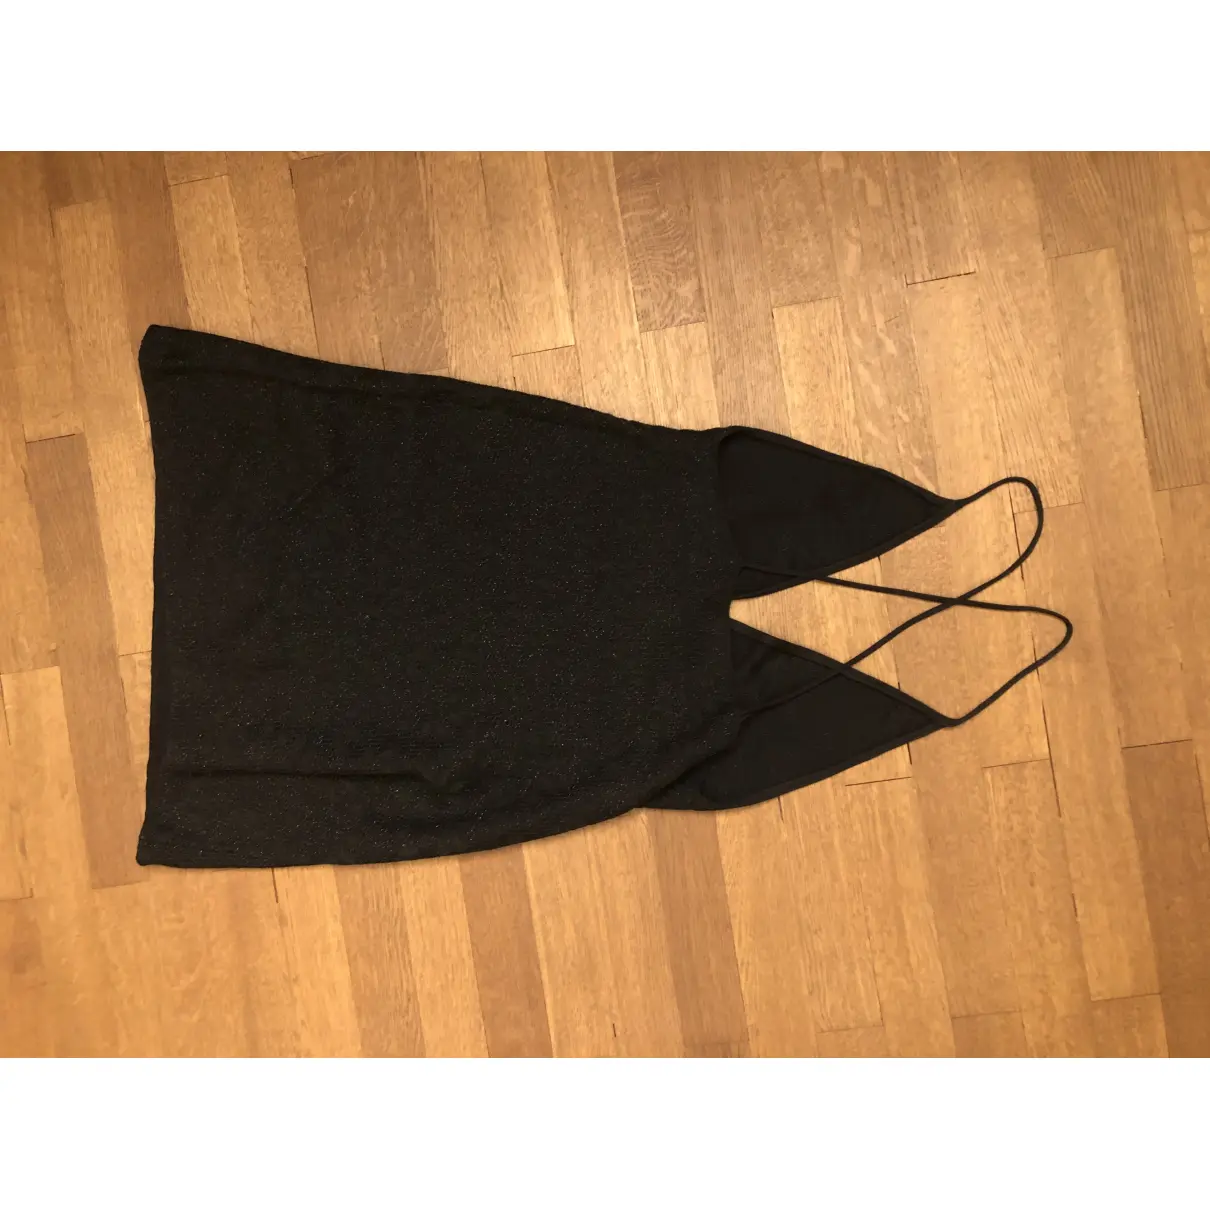 Buy Saint Laurent Silk mini dress online